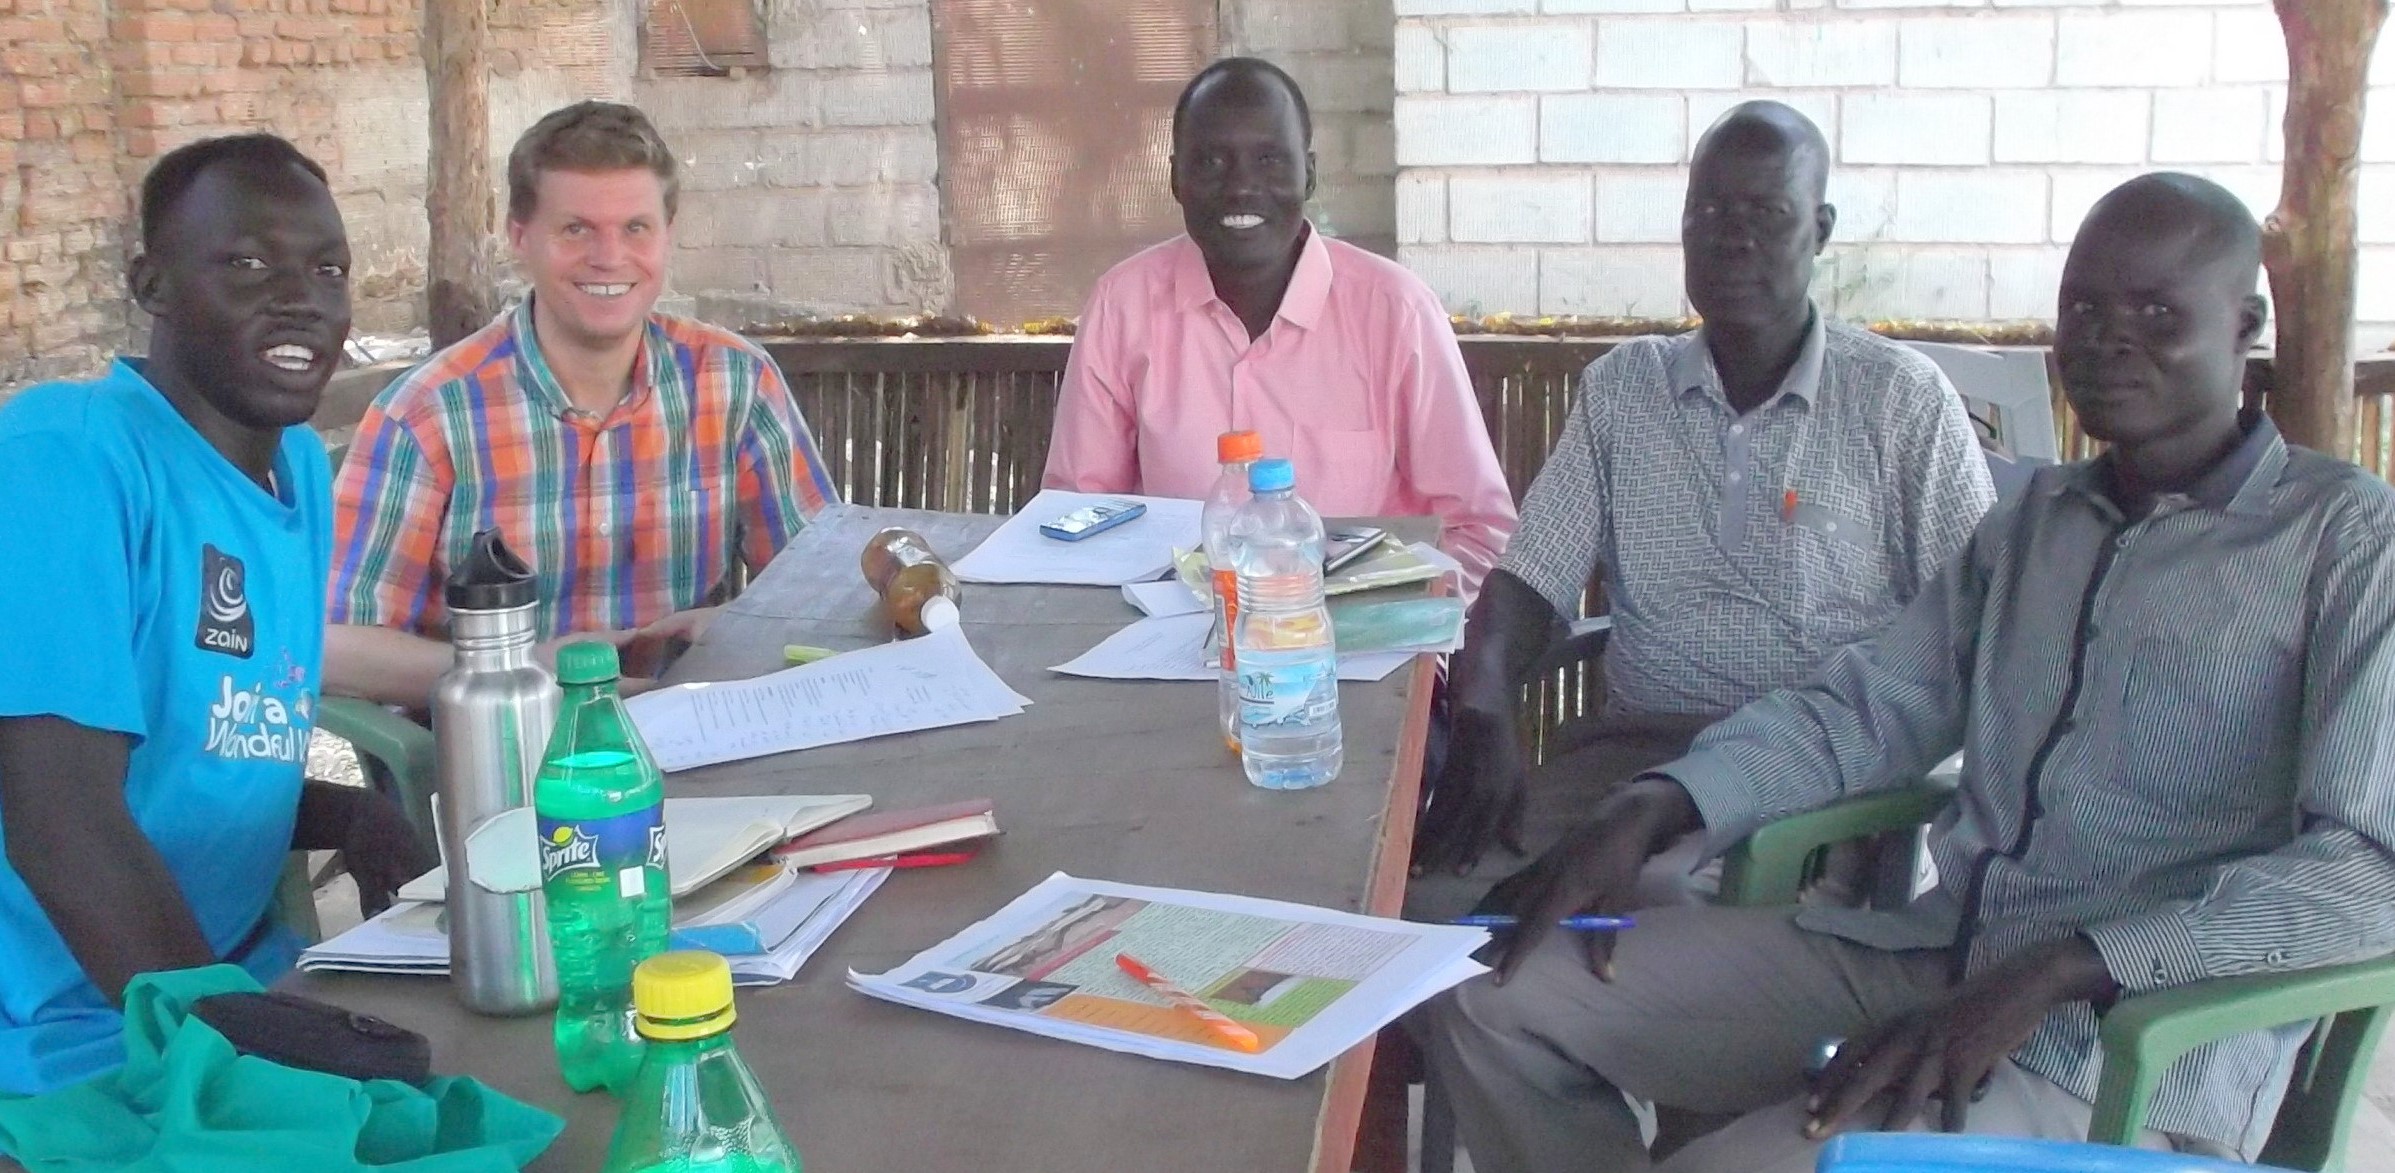 Bob with students, Nile Theological College, Juba, South Sudan.